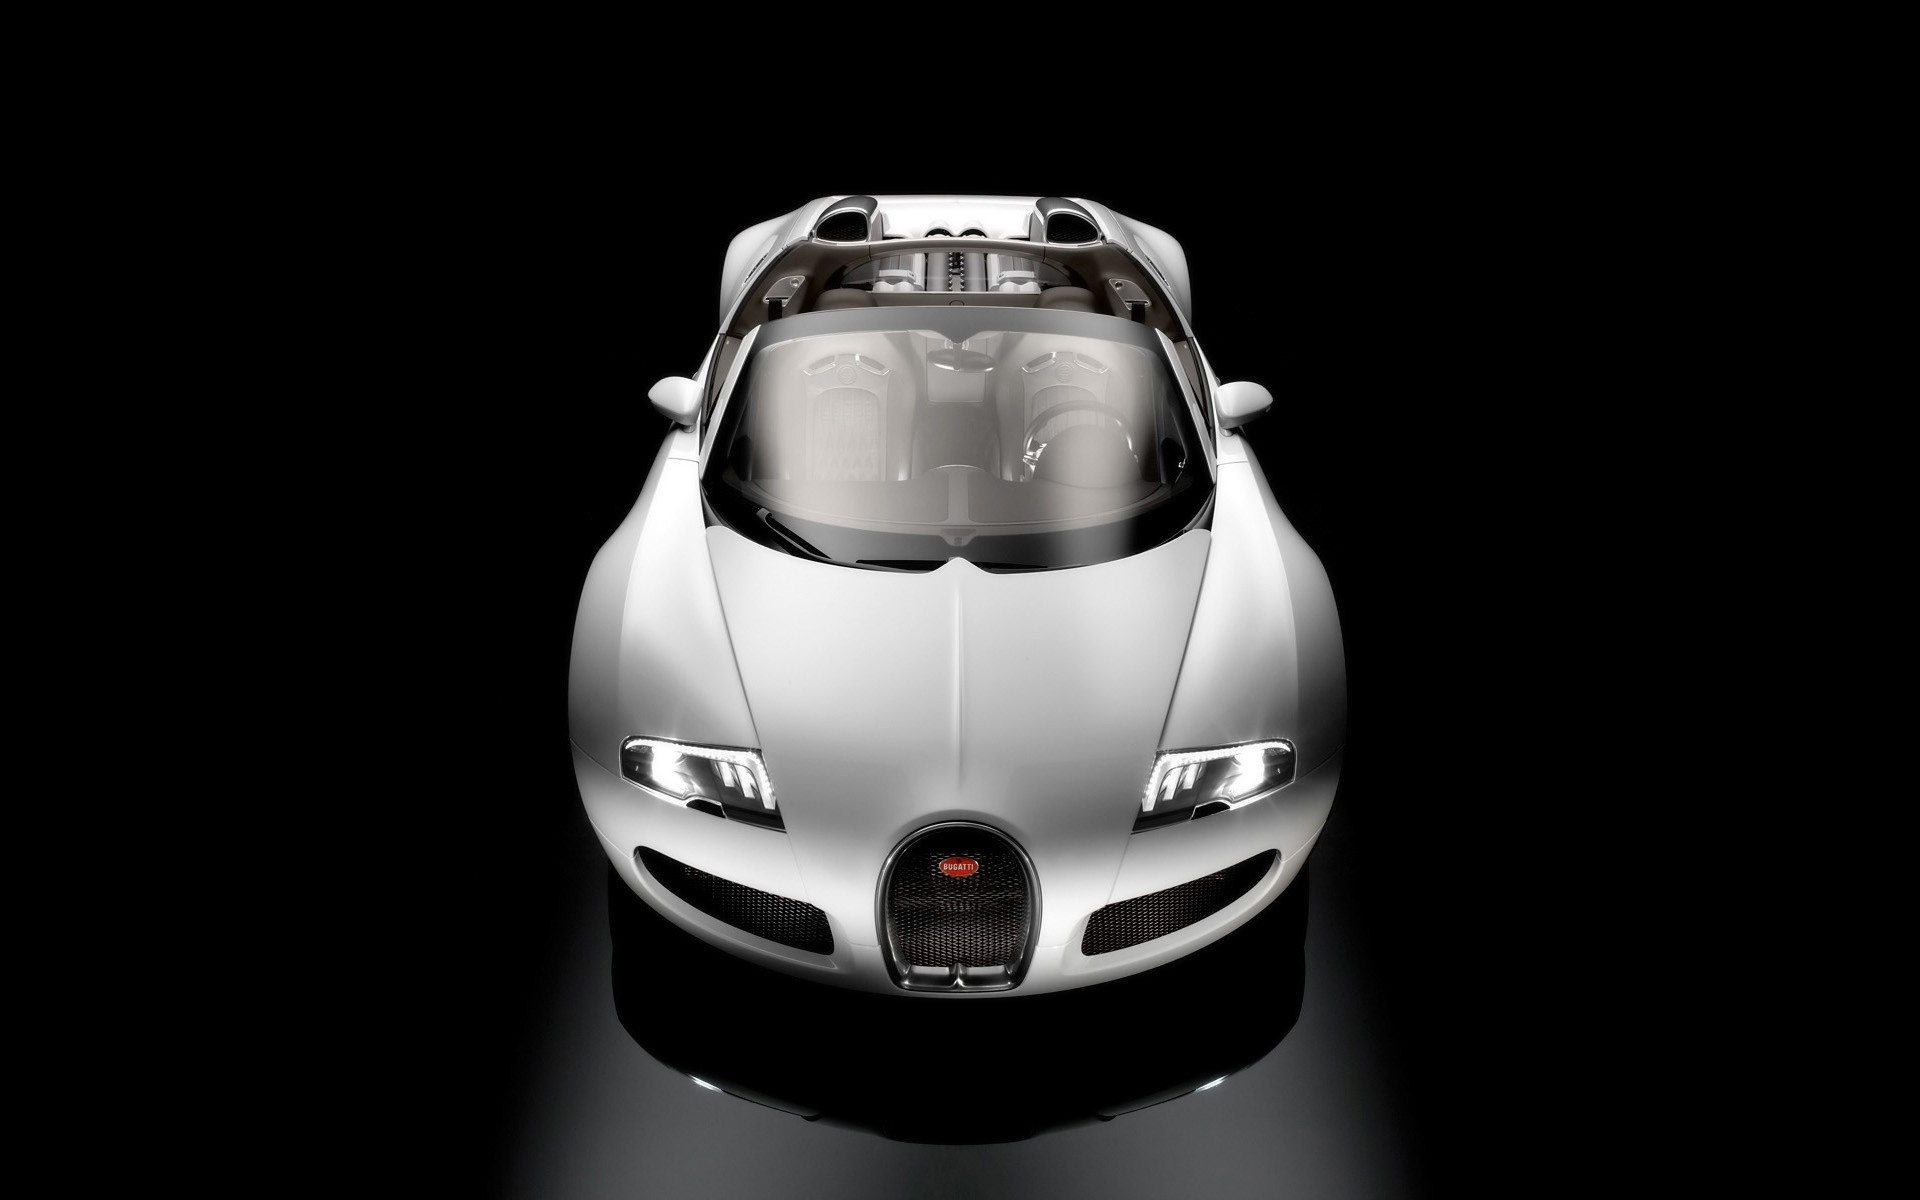 Bugatti Veyron 16.4 Grand Sport Production Version 2009 - Studio Front Top for 1920 x 1200 widescreen resolution